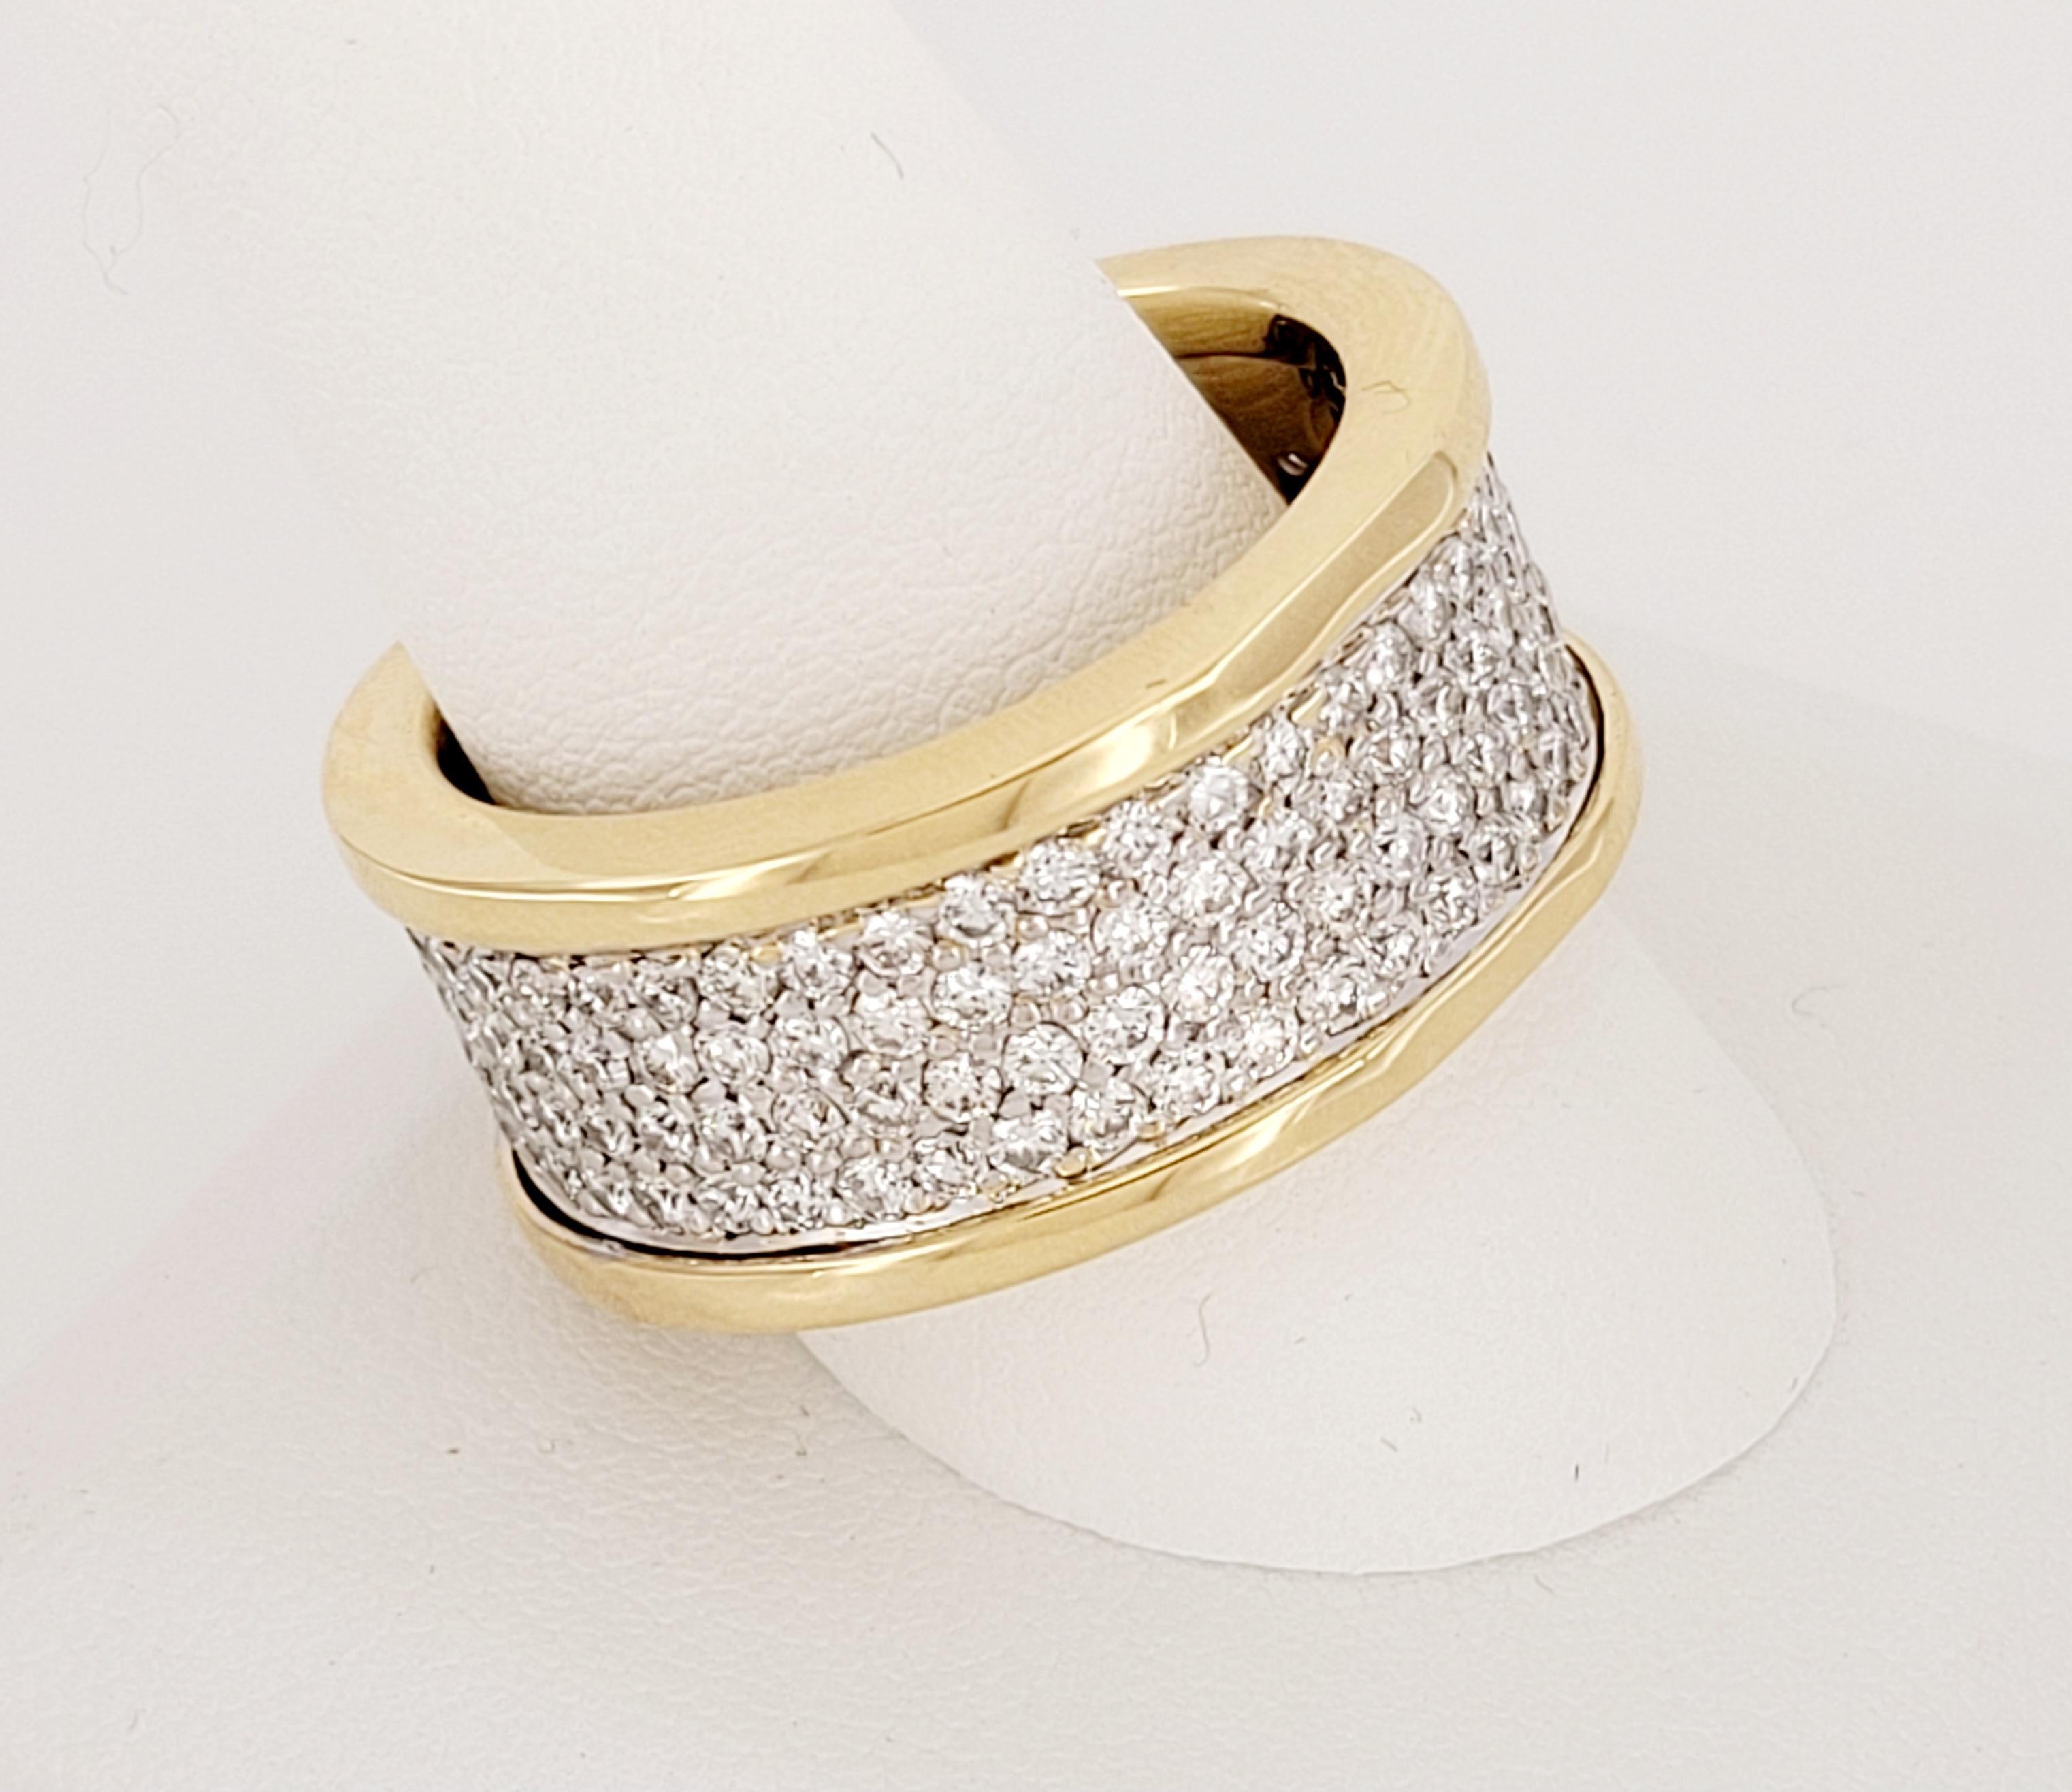 Men's Hand Made Ring
Material 18K Yellow Gold 
Diamonds 180pcs 
Diamond 4.75ct 
Diamond Clarity VS
Color Grade E-F
Weight 23.4
Condition New, never worn 
Retail Price $6,900